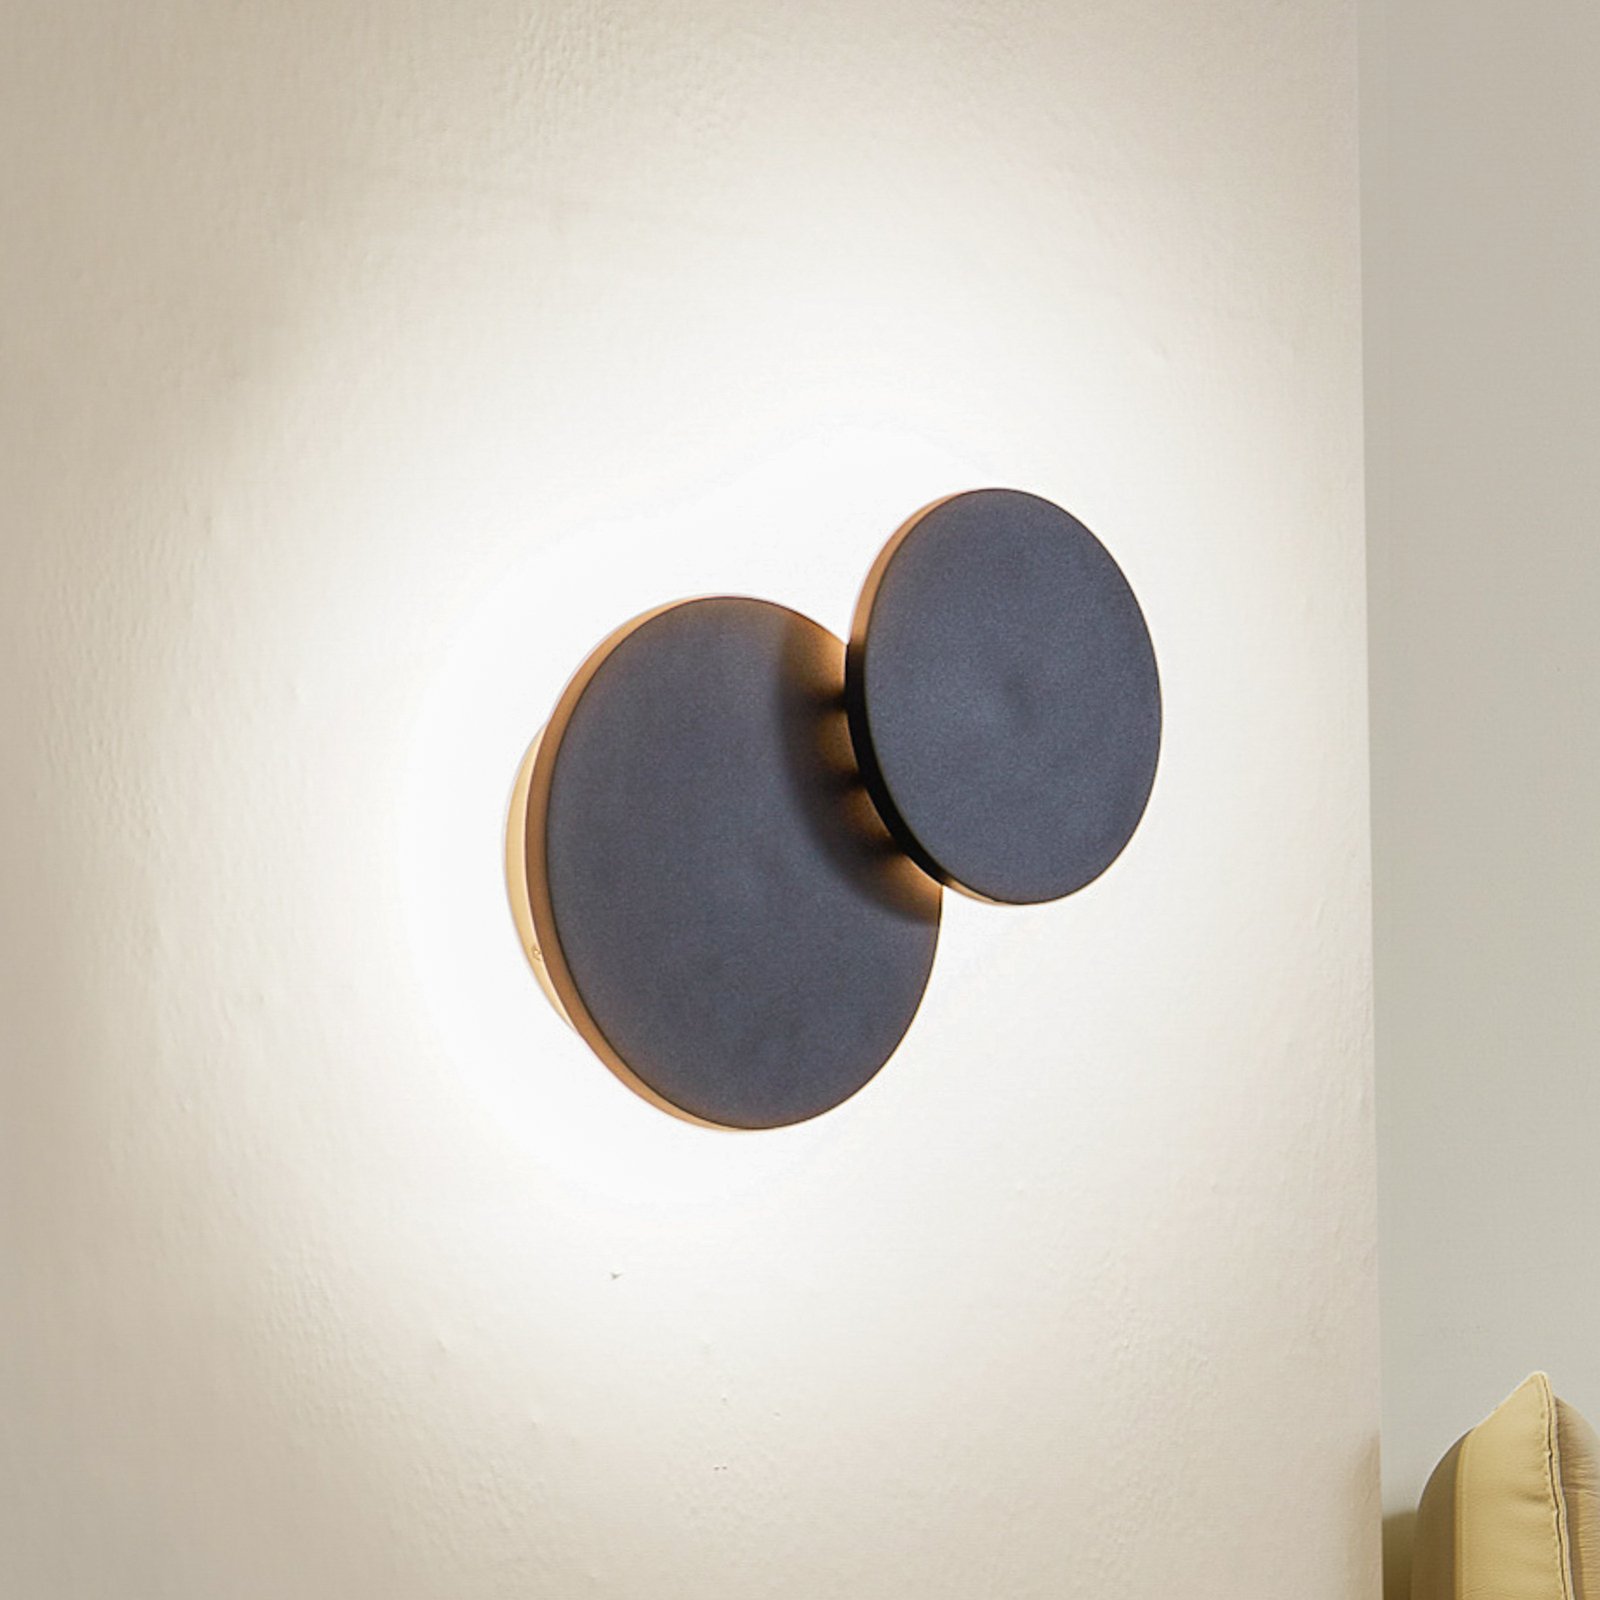 Lucande LED wall light Elrik, black, 20 cm high, metal